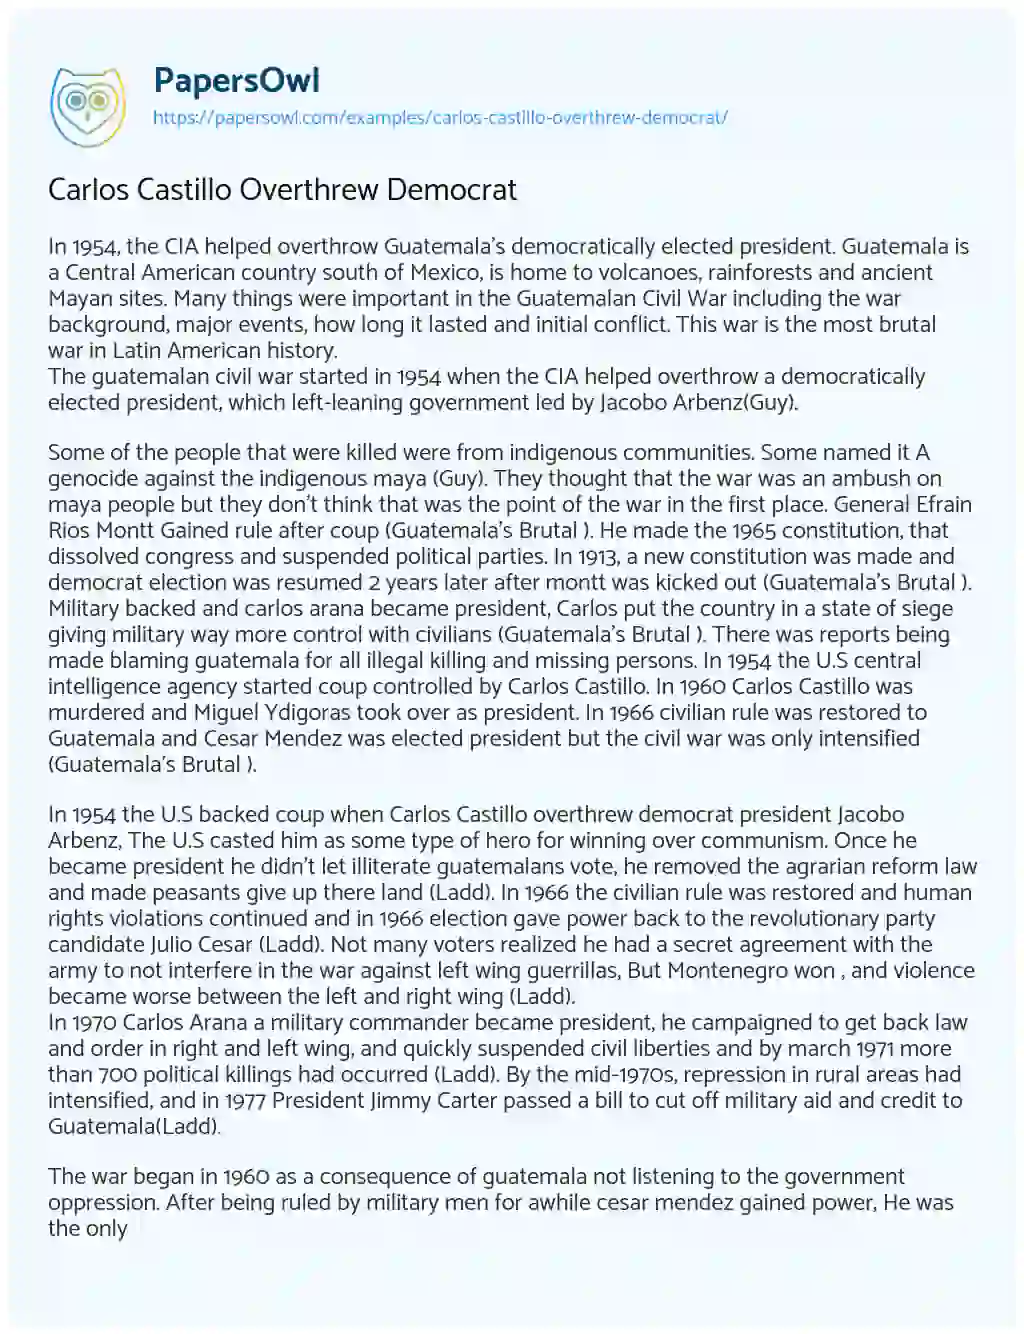 Essay on Carlos Castillo Overthrew Democrat